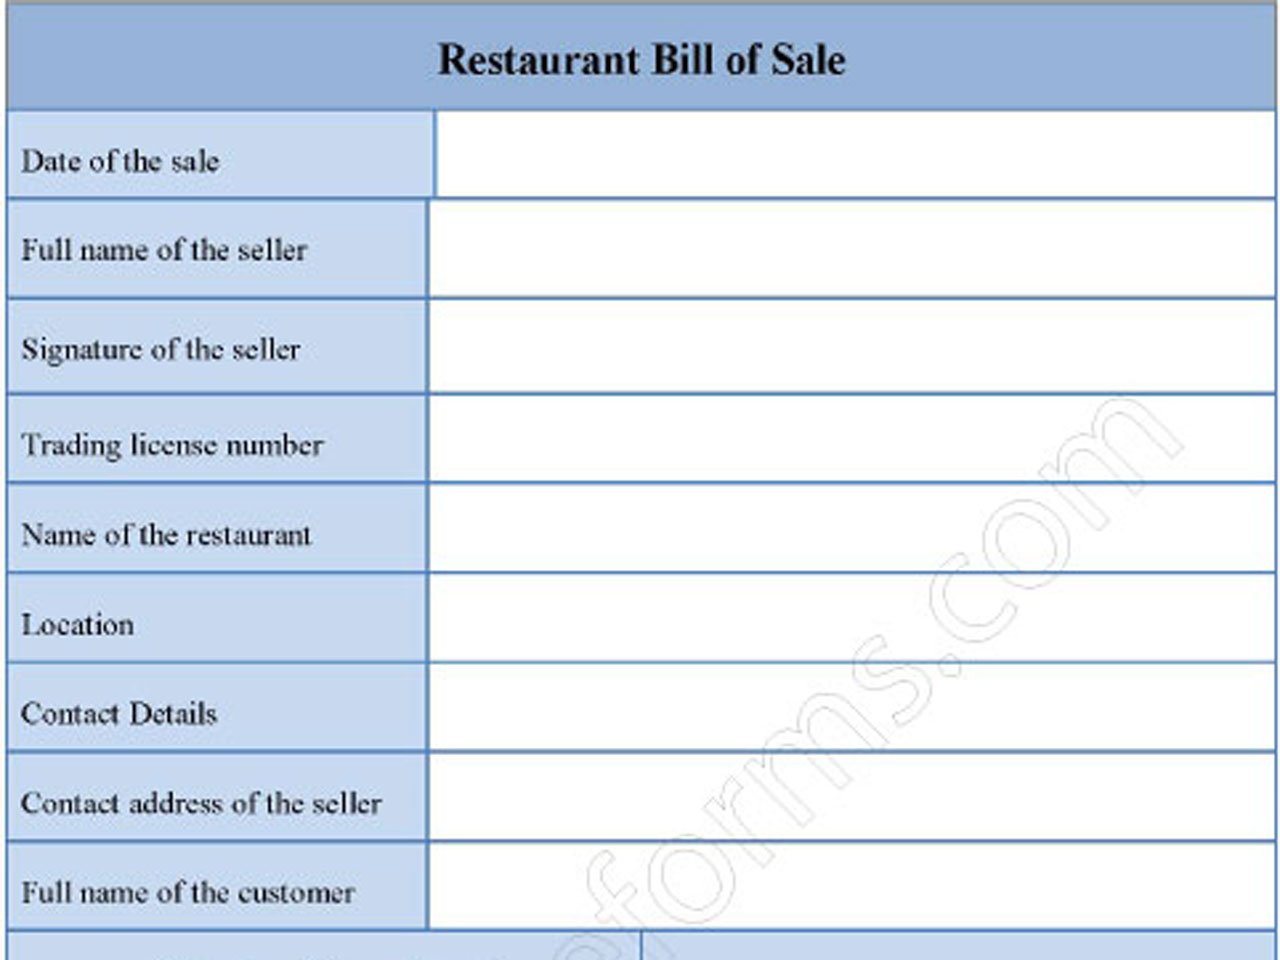 Restaurant Bill of Sale Form